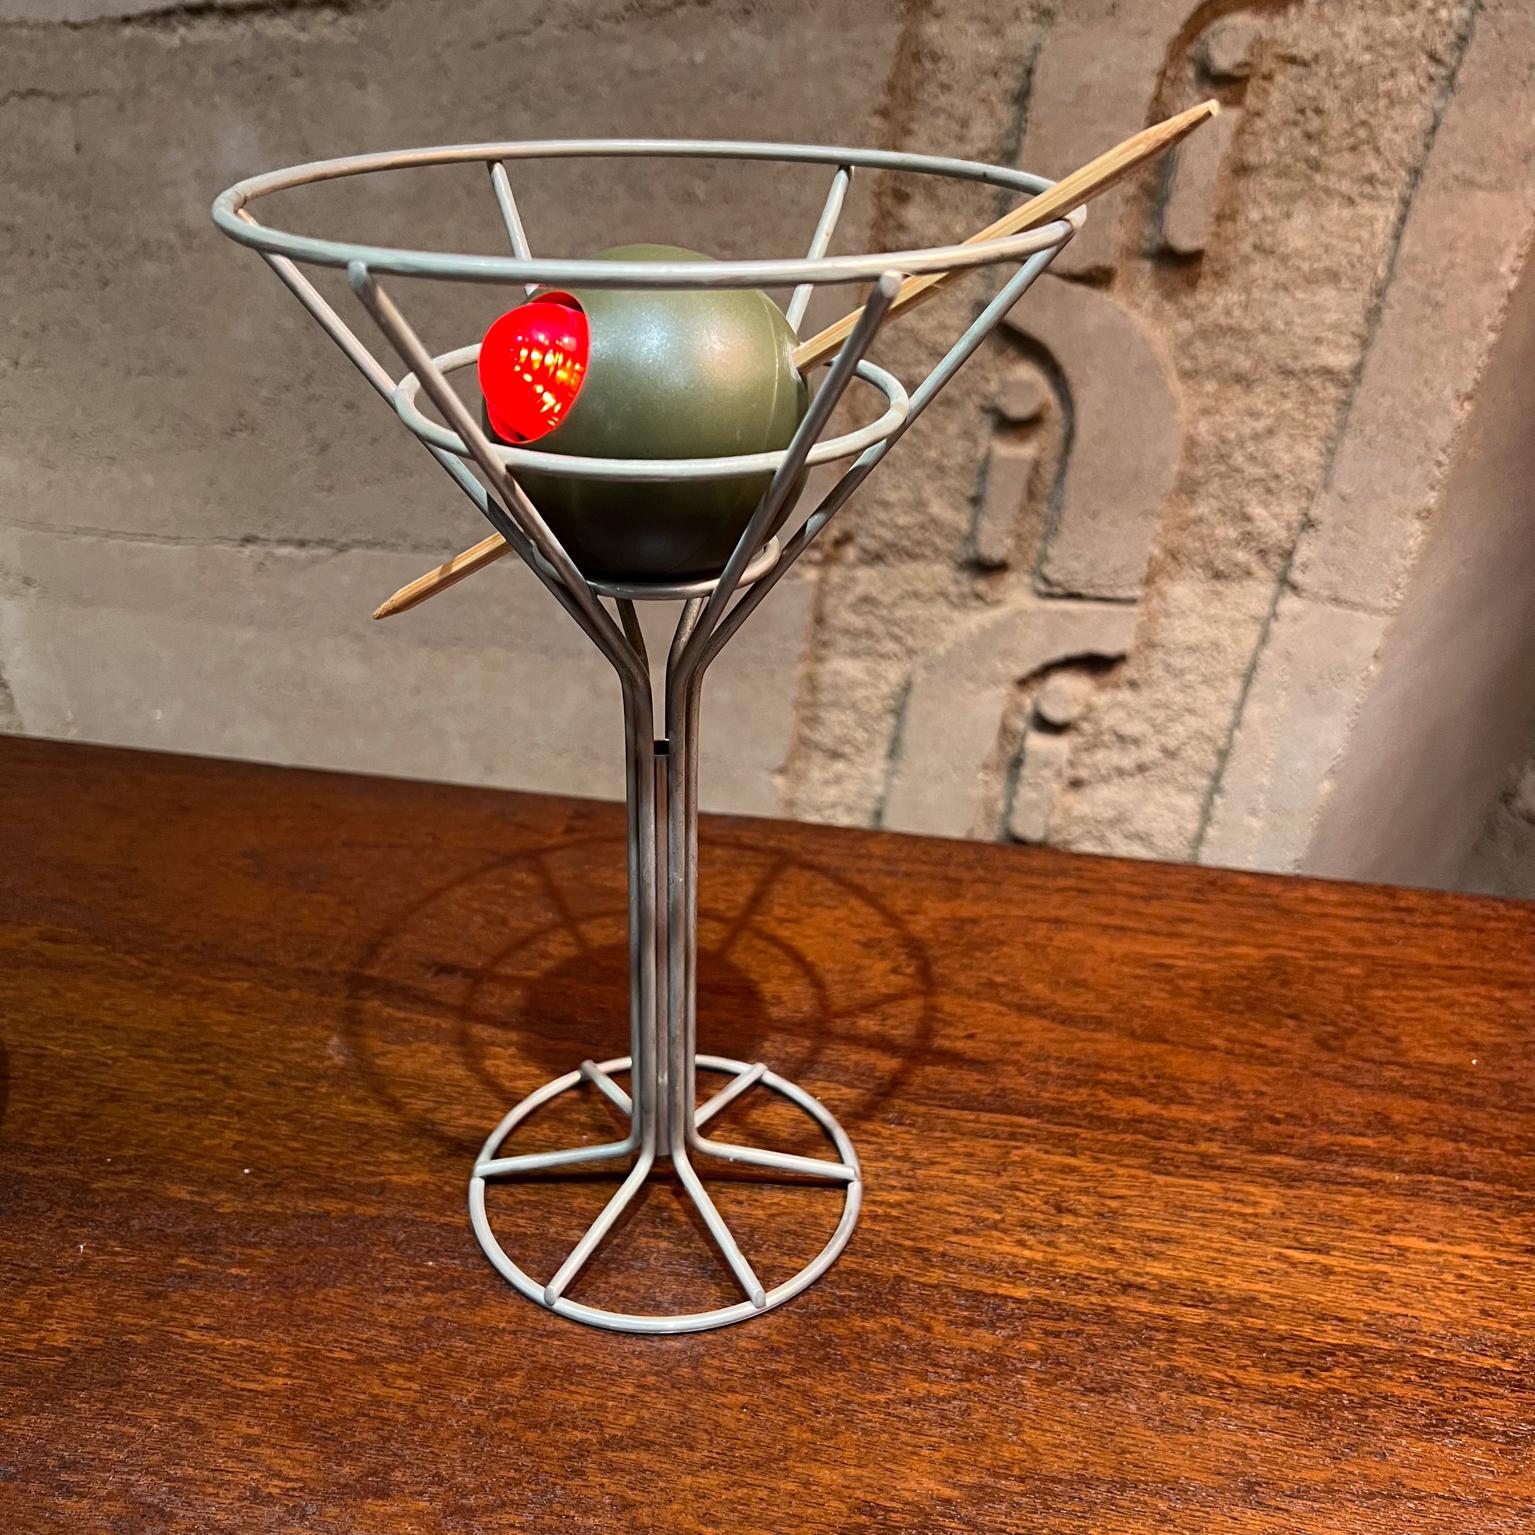 1993 Martini & Olive Chrom-Barlampe von David Krys (Ende des 20. Jahrhunderts) im Angebot